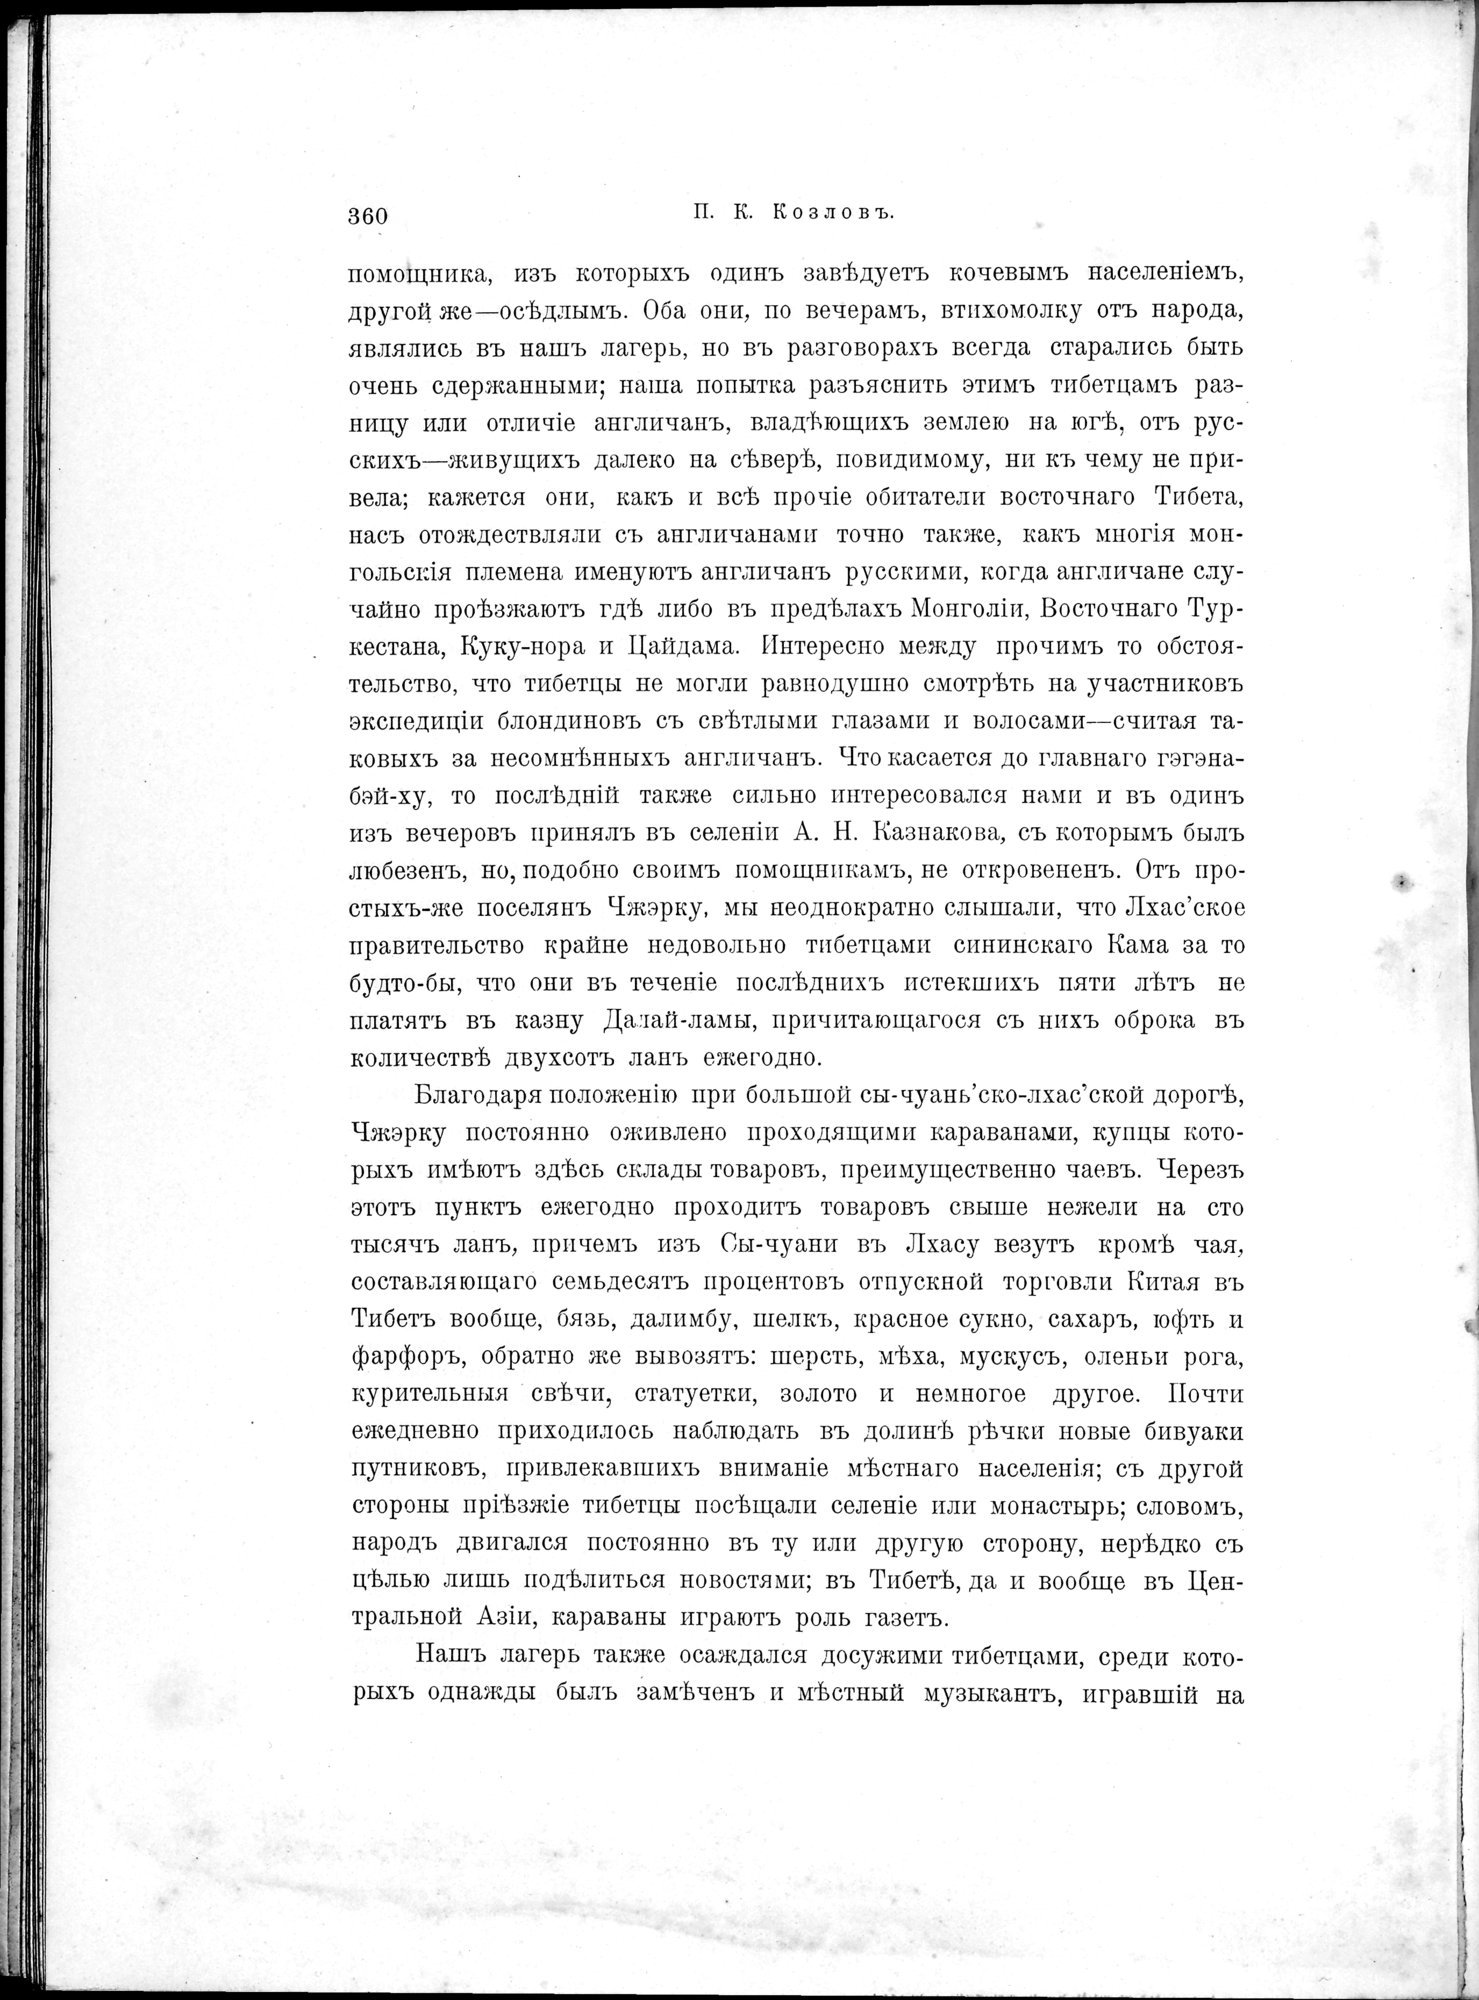 Mongoliia i Kam : vol.2 / Page 142 (Grayscale High Resolution Image)